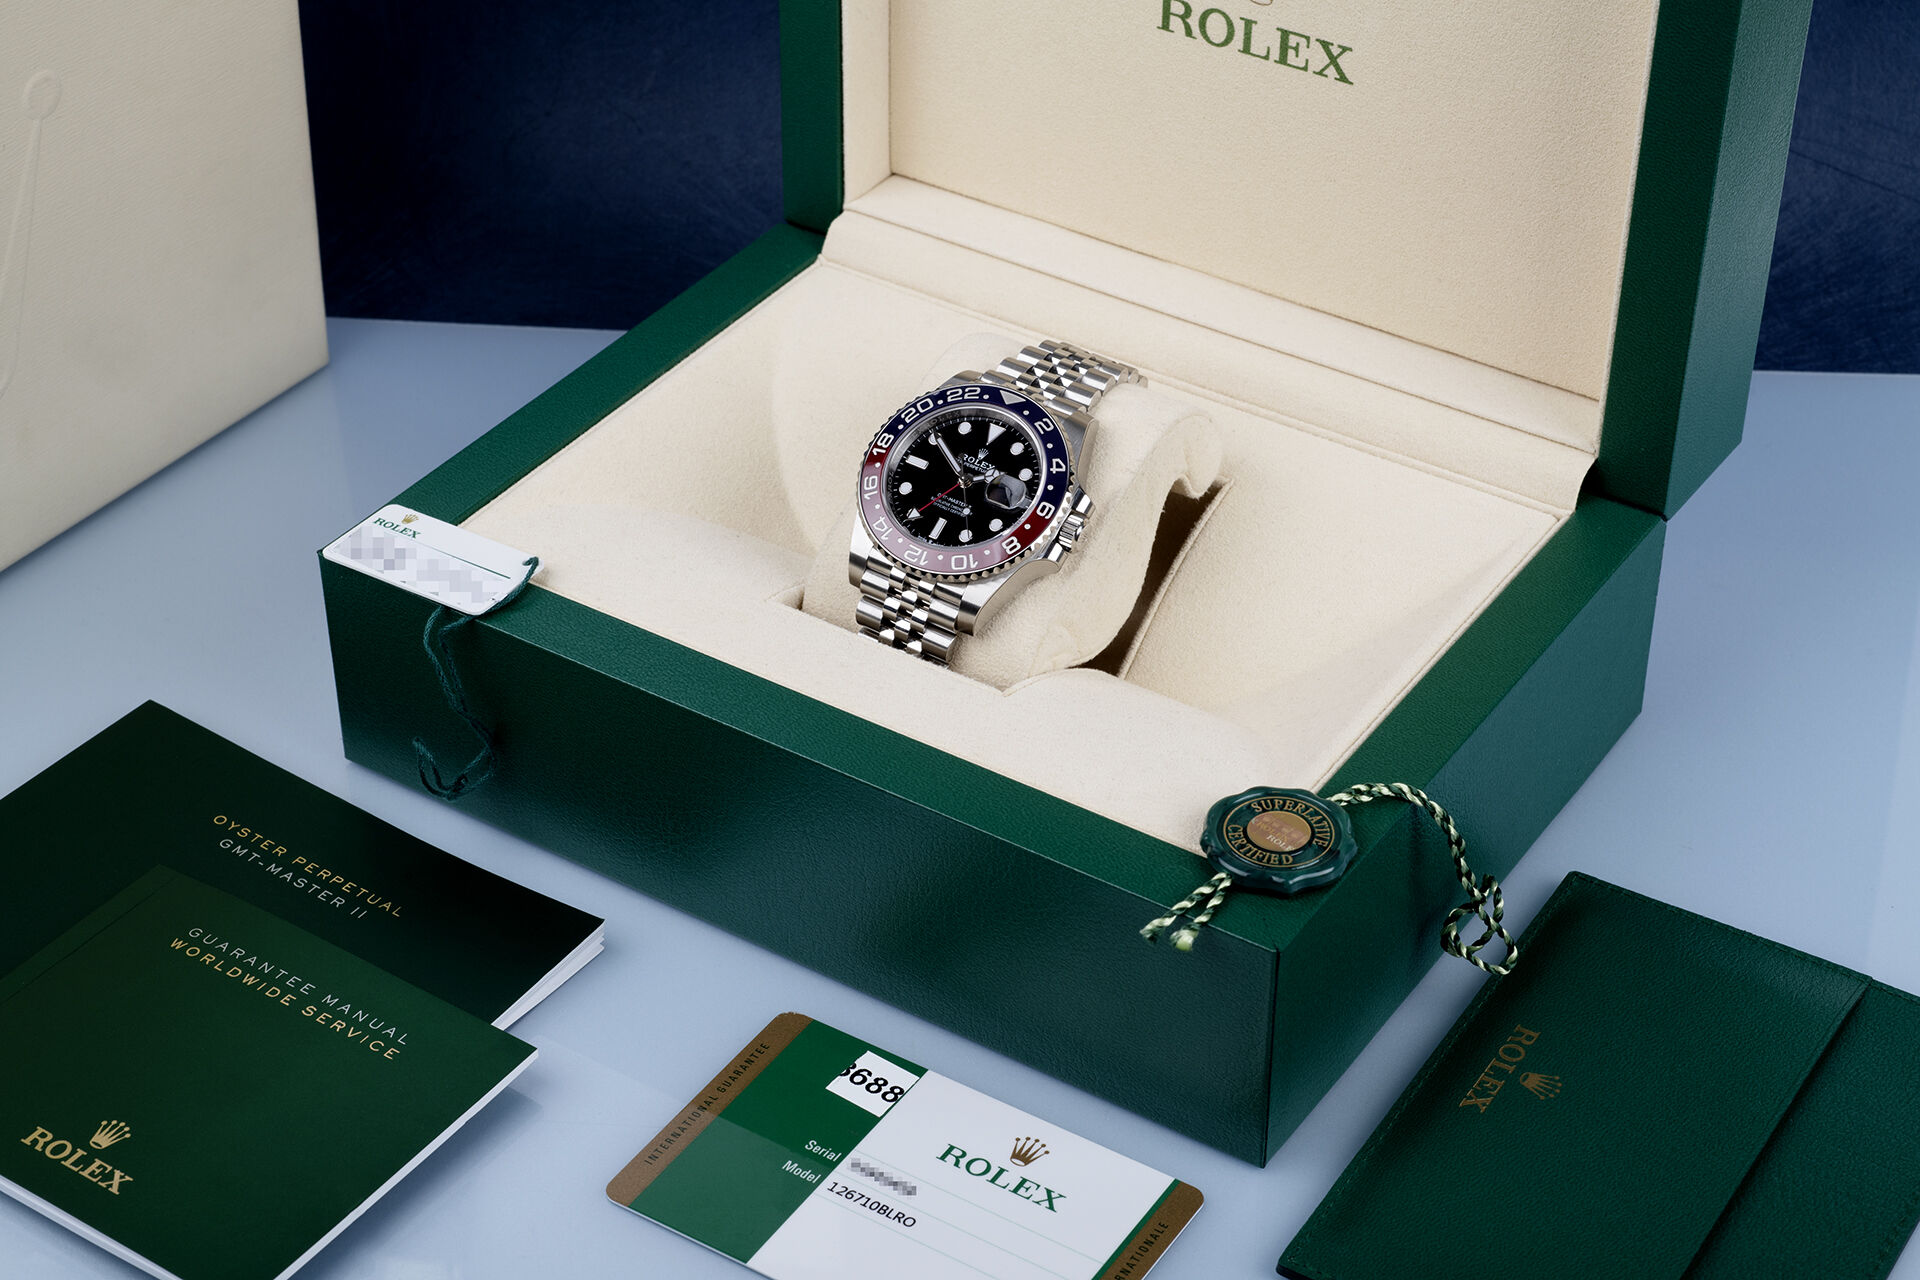 ref 126710BLRO | Box & Certificate | Rolex GMT-Master II